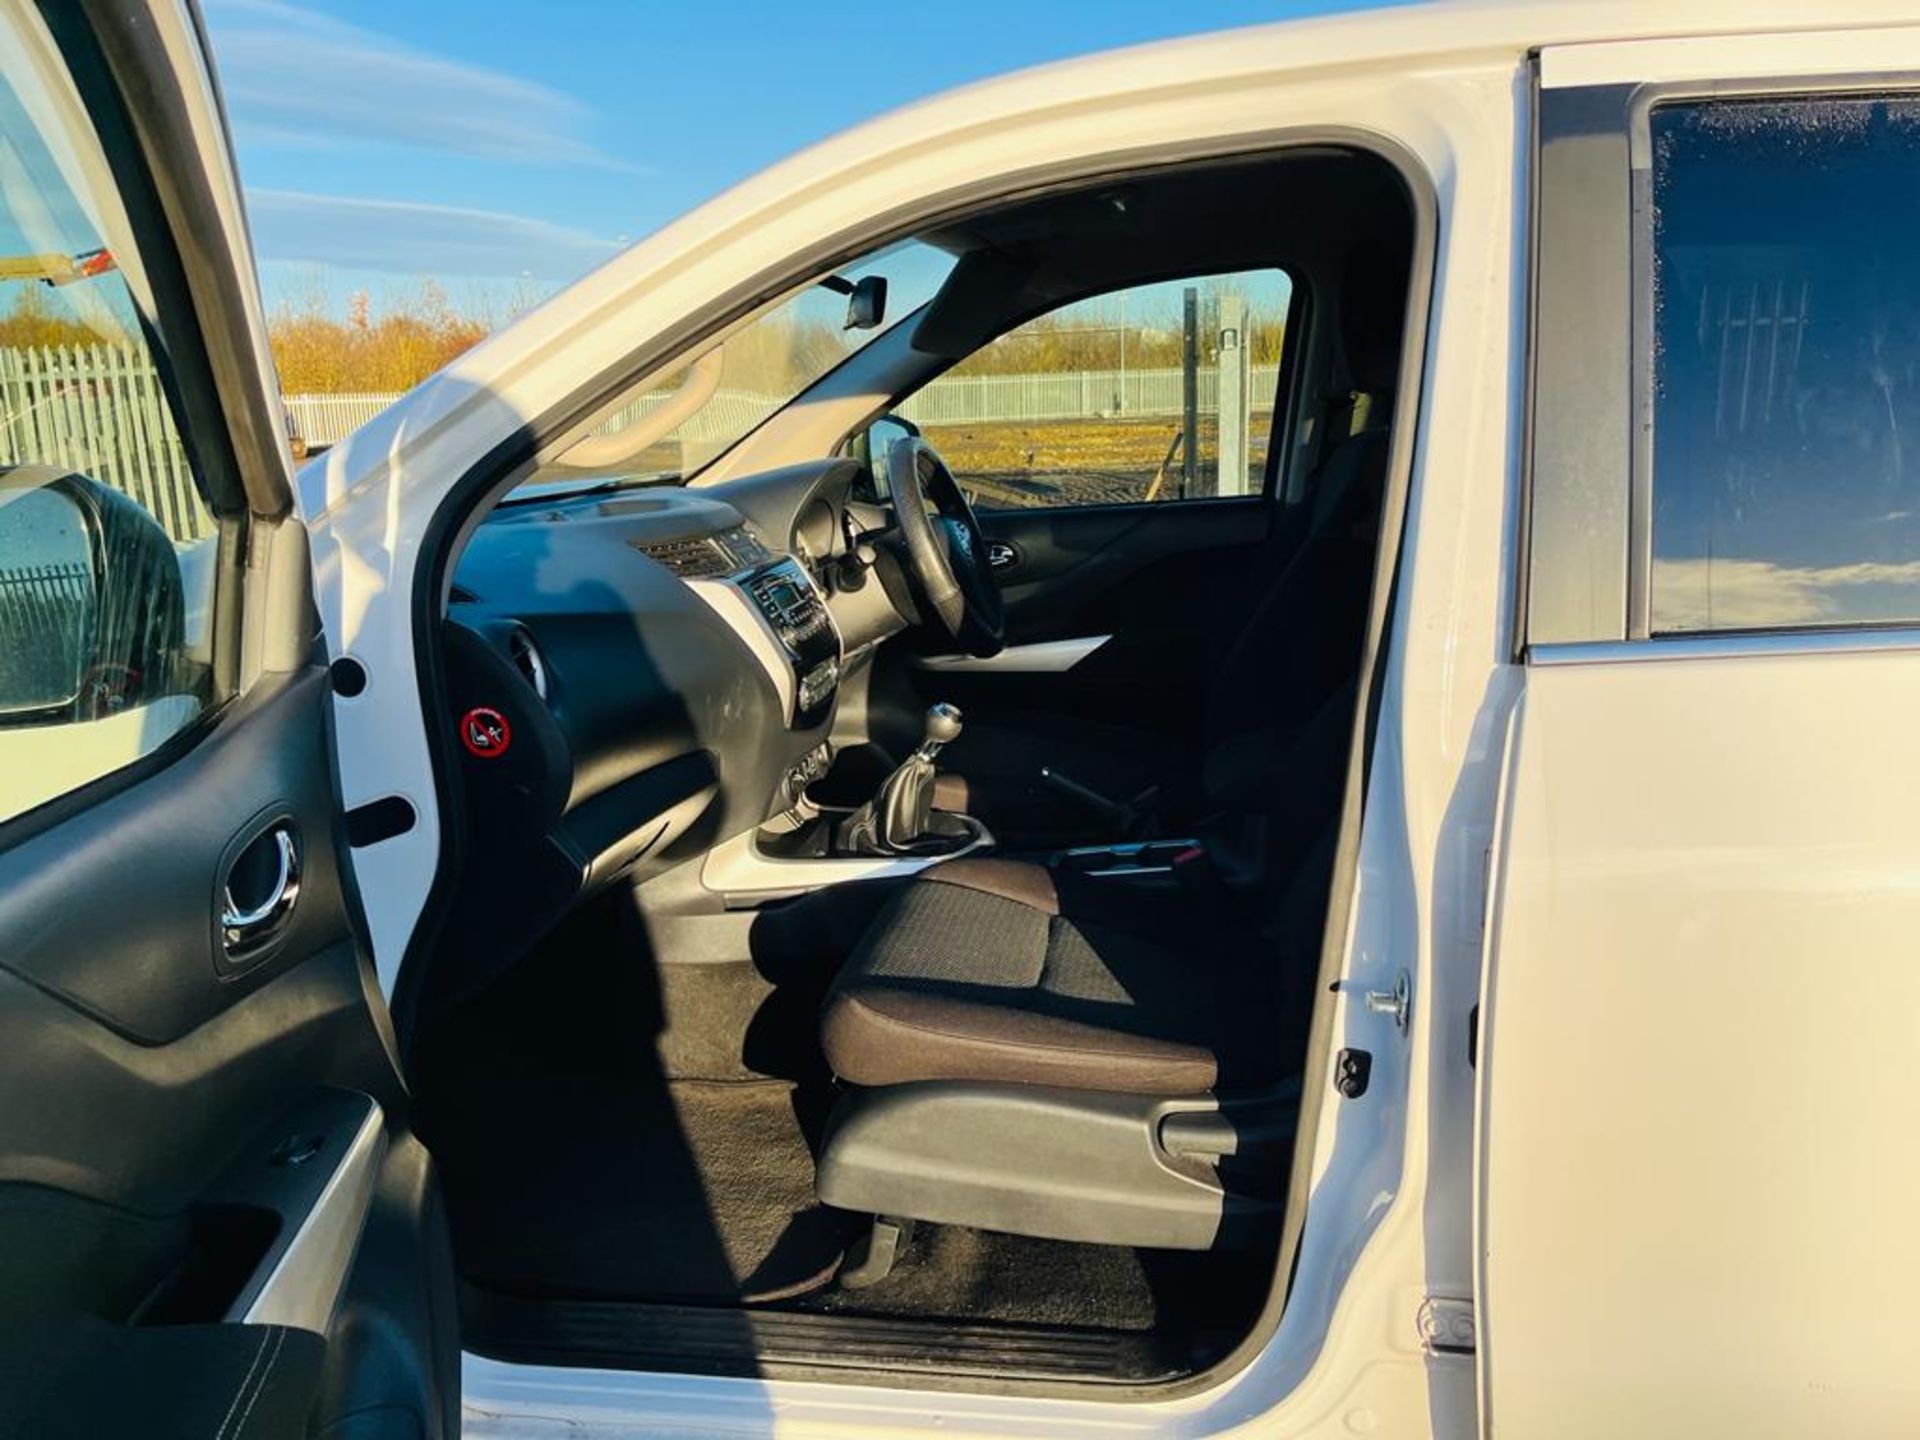 Nissan Navara 2.3 DCI 163 Acenta CrewCab 4WD Pickup 2019 '19 Reg' ULEZ Compliant - Image 20 of 33